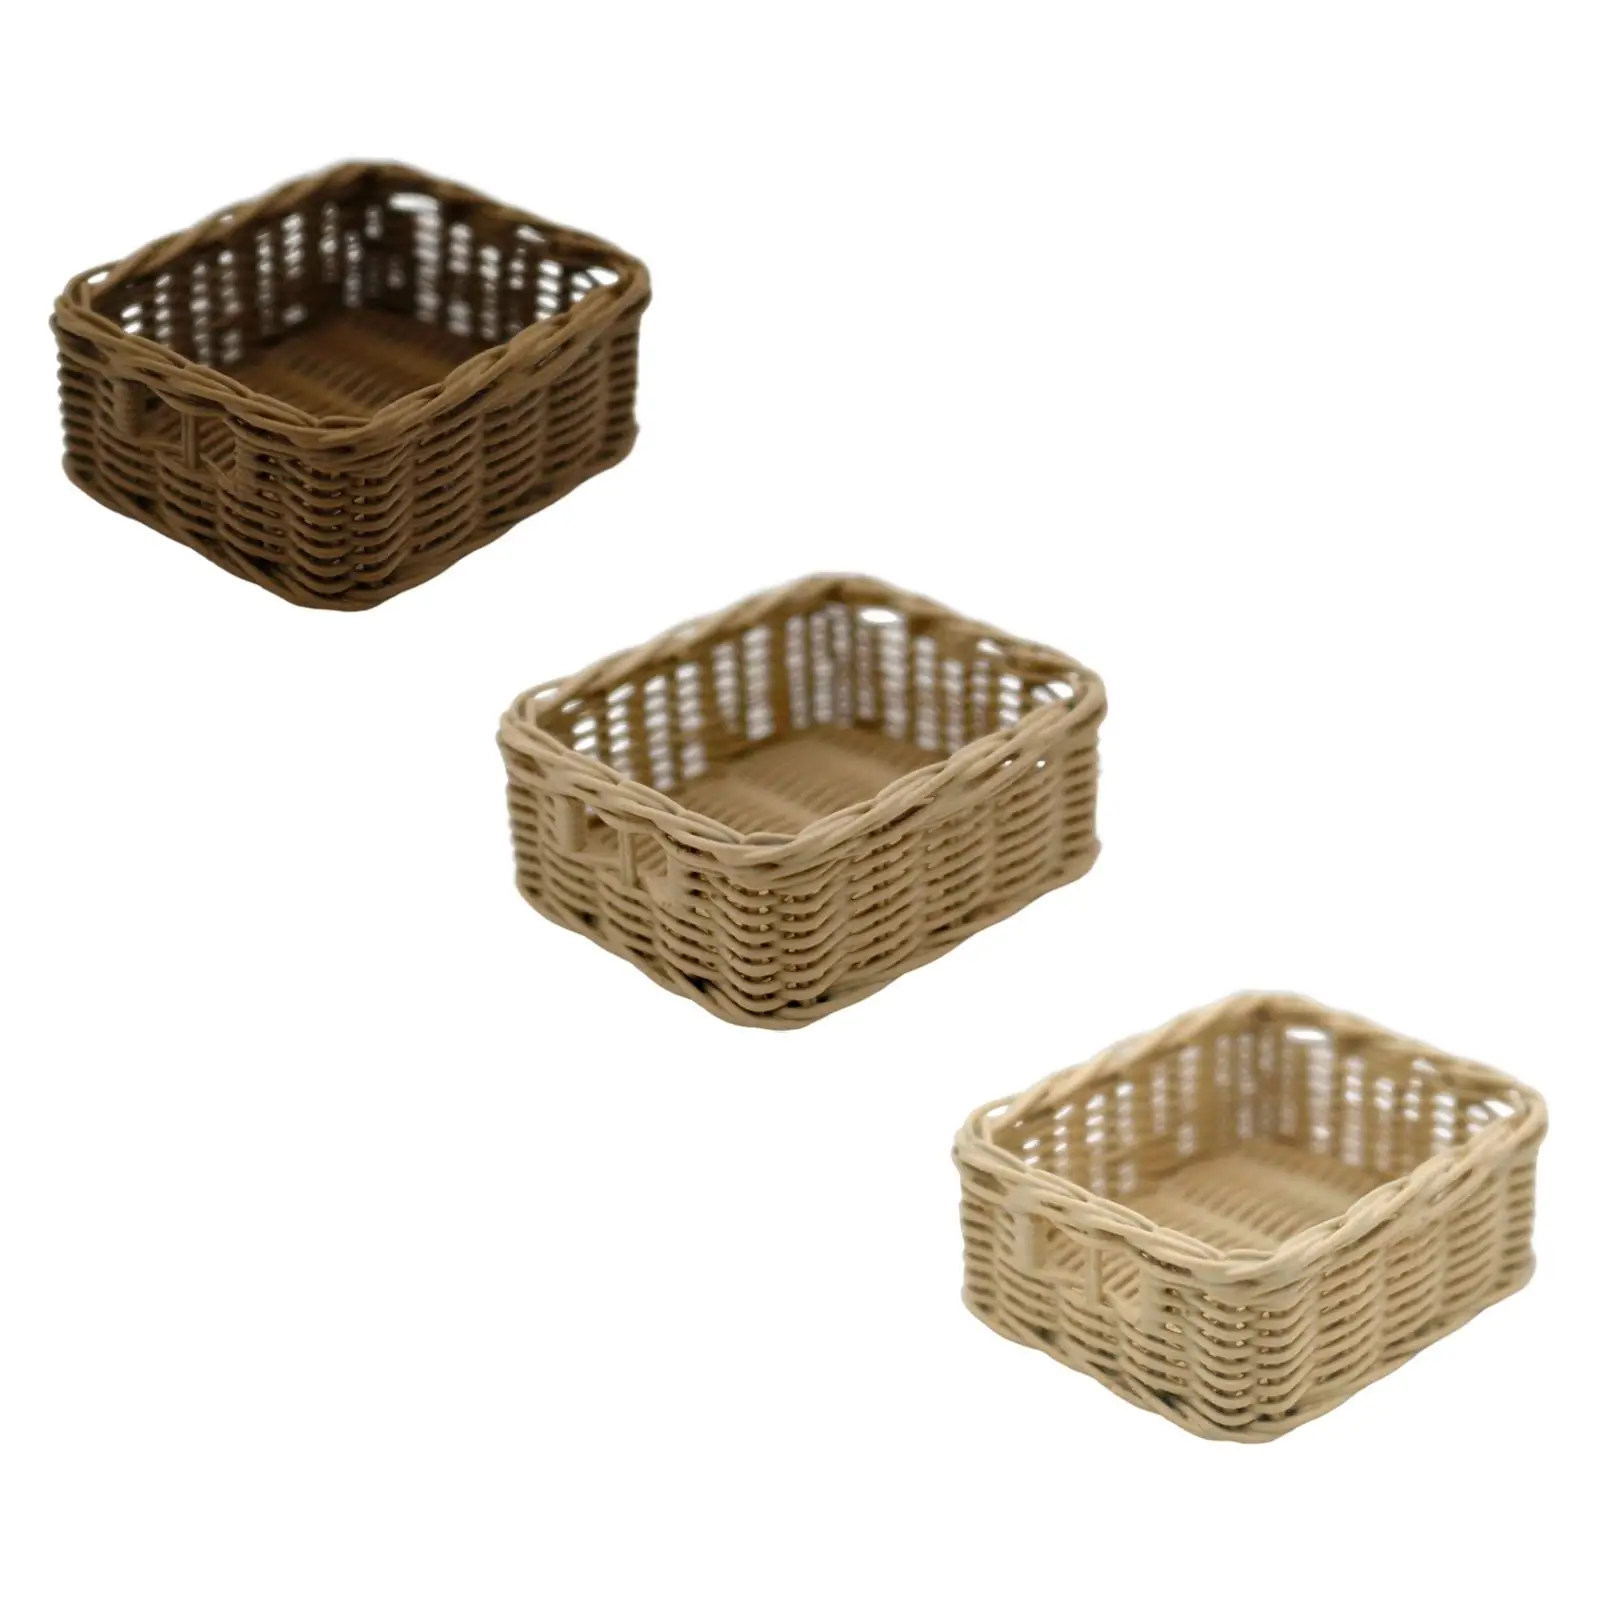 1/6 Resin Dollhouse Basket Mini Scenes Props Miniature Woven Basket for Dollhouse Fairy Garden Room Decoration